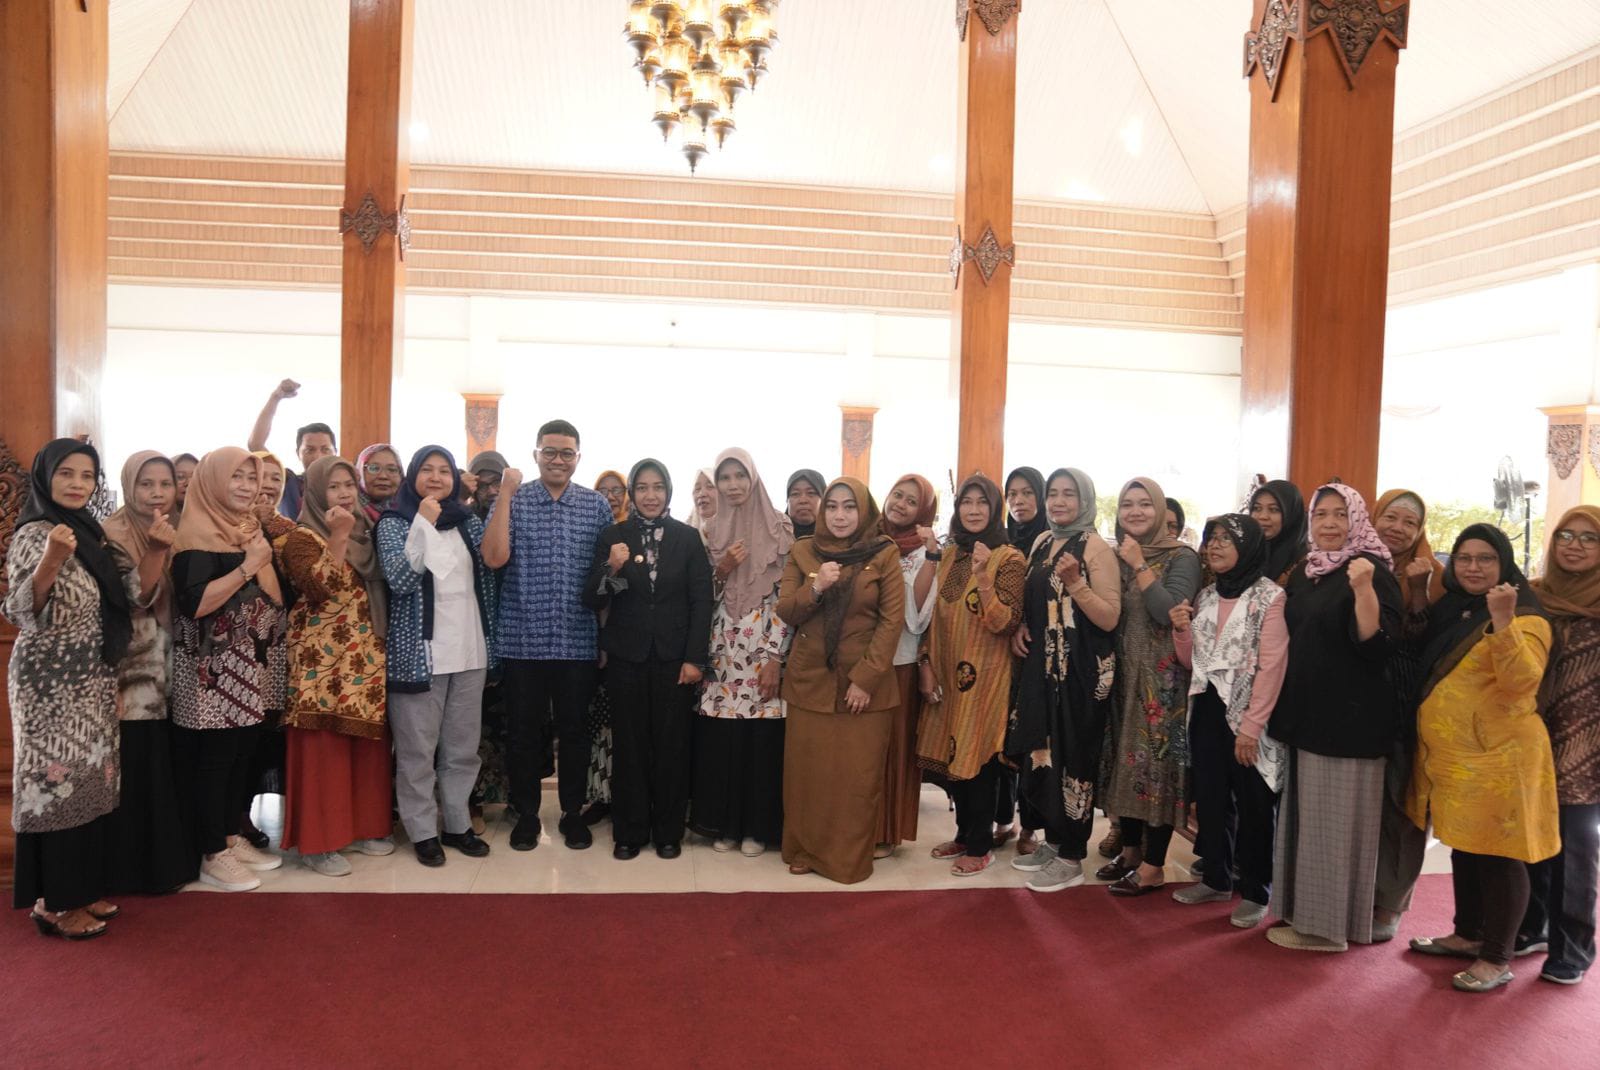 Pelatihan Batik, Wali Kota Mojokerto Harapkan Pengrajin Batik Menarasikan Filosofi Dari Coretan di Atas Kain